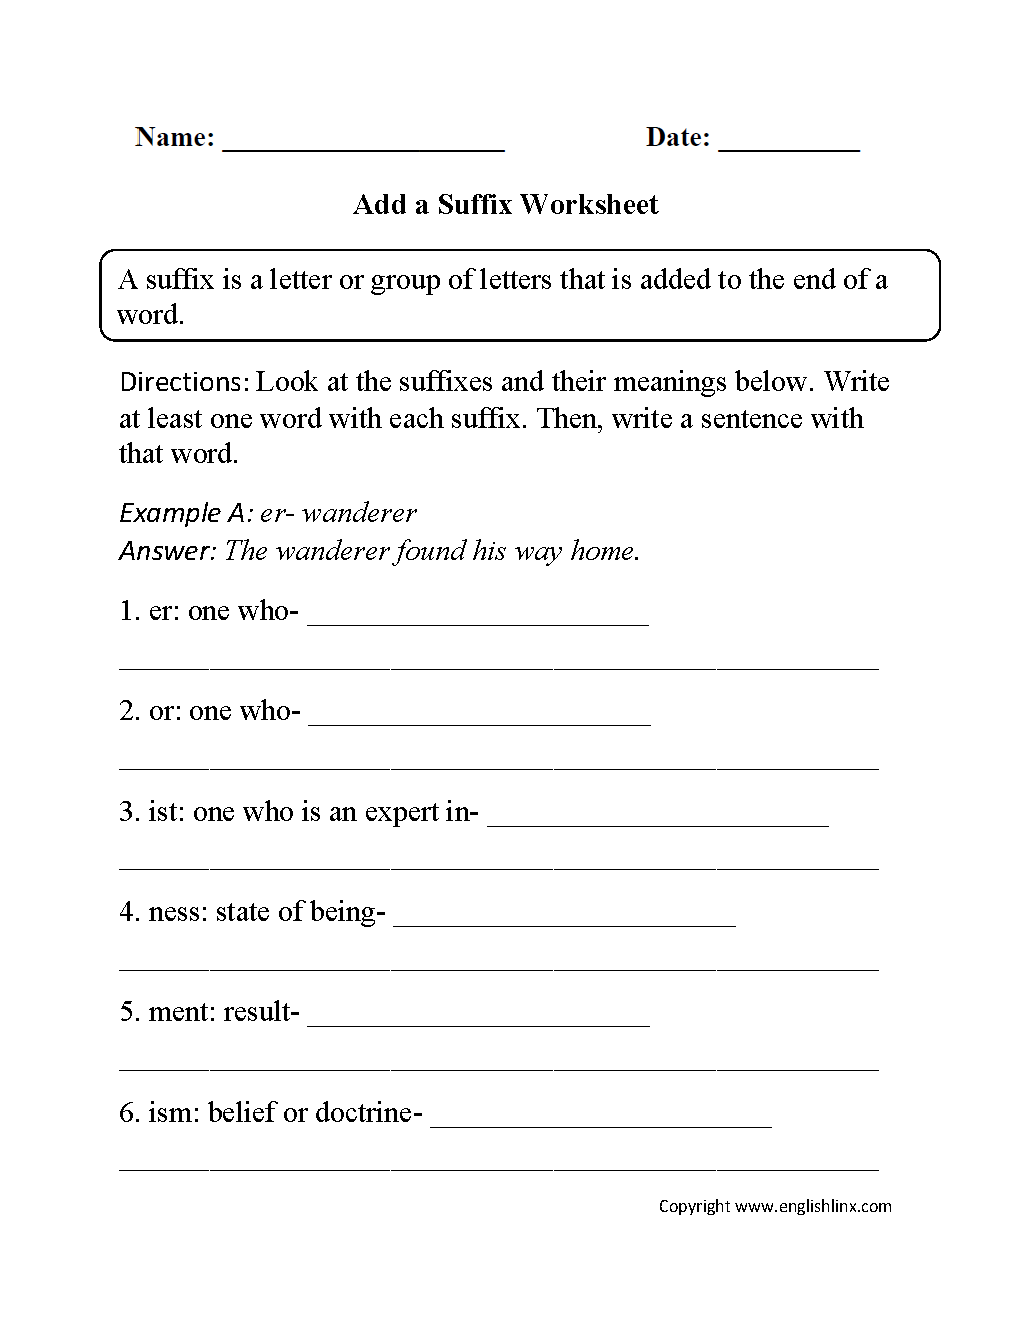 Add a Suffix Worksheet